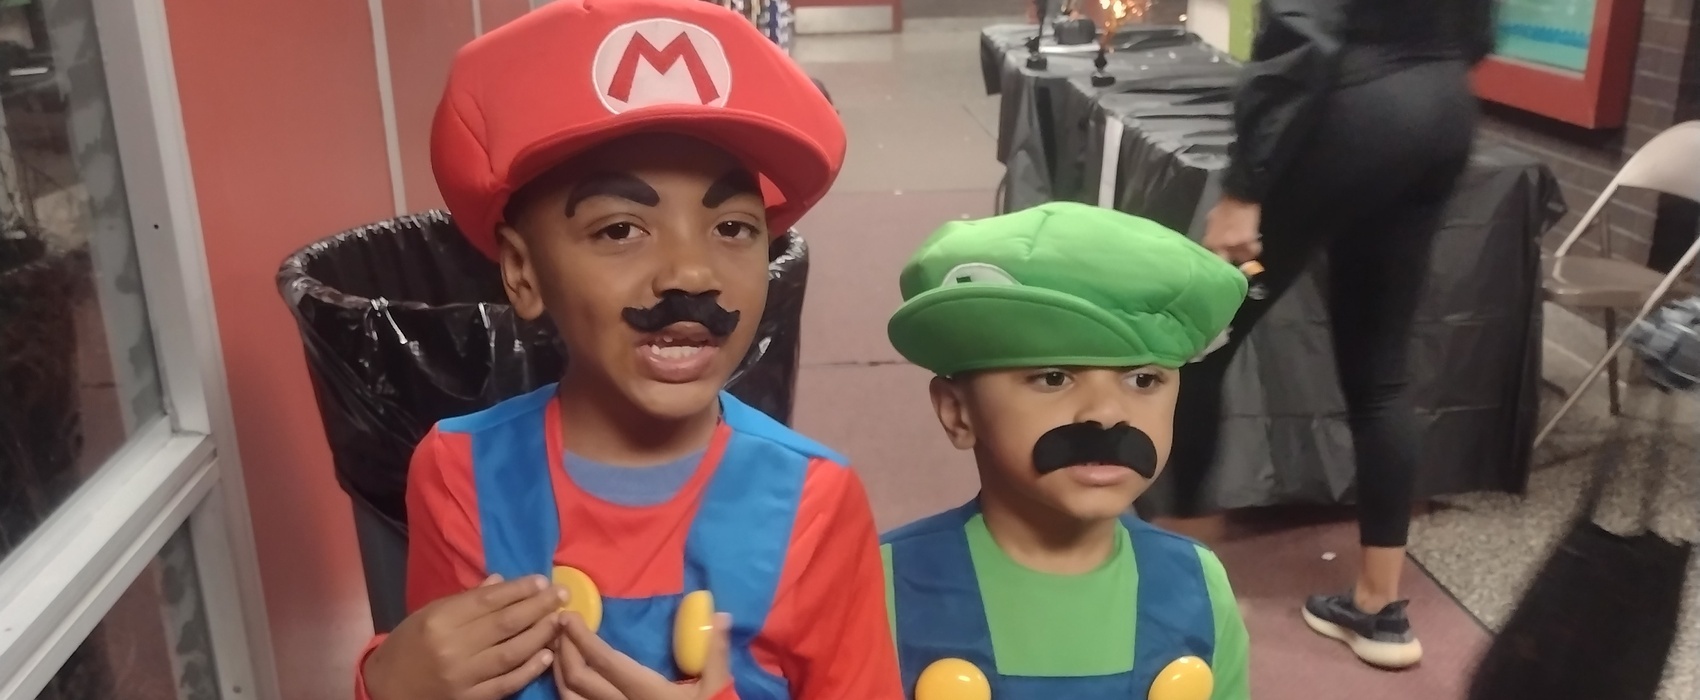 Mario and Luigi at Oktoberfest